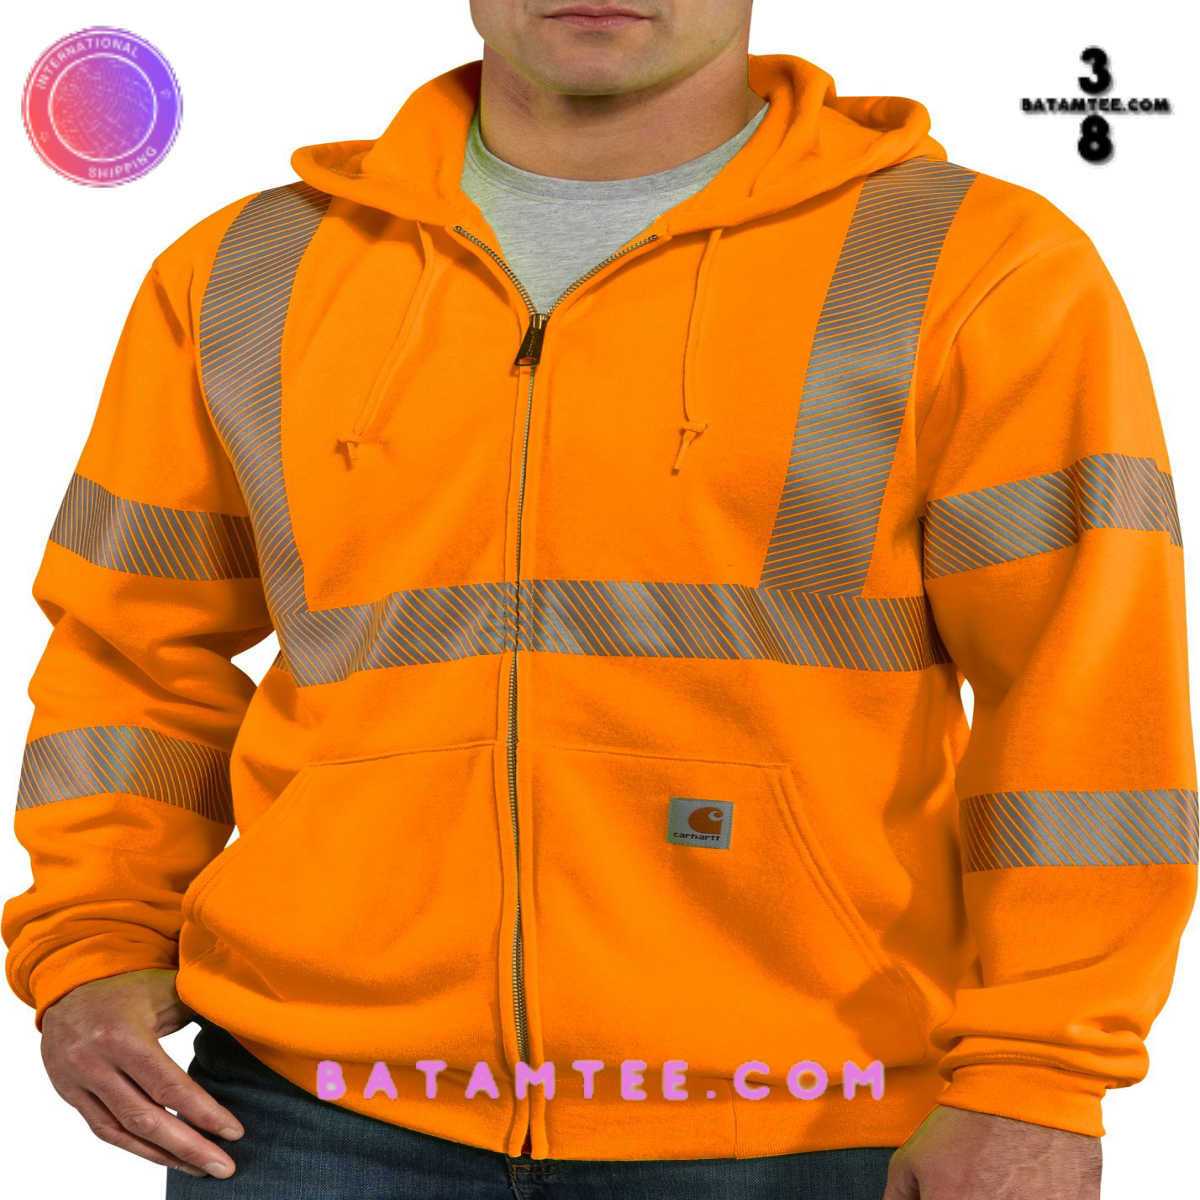 Carhartt Hi-Vis Orange Hoodie - Batamtee Shop - Threads & Totes: Your ...